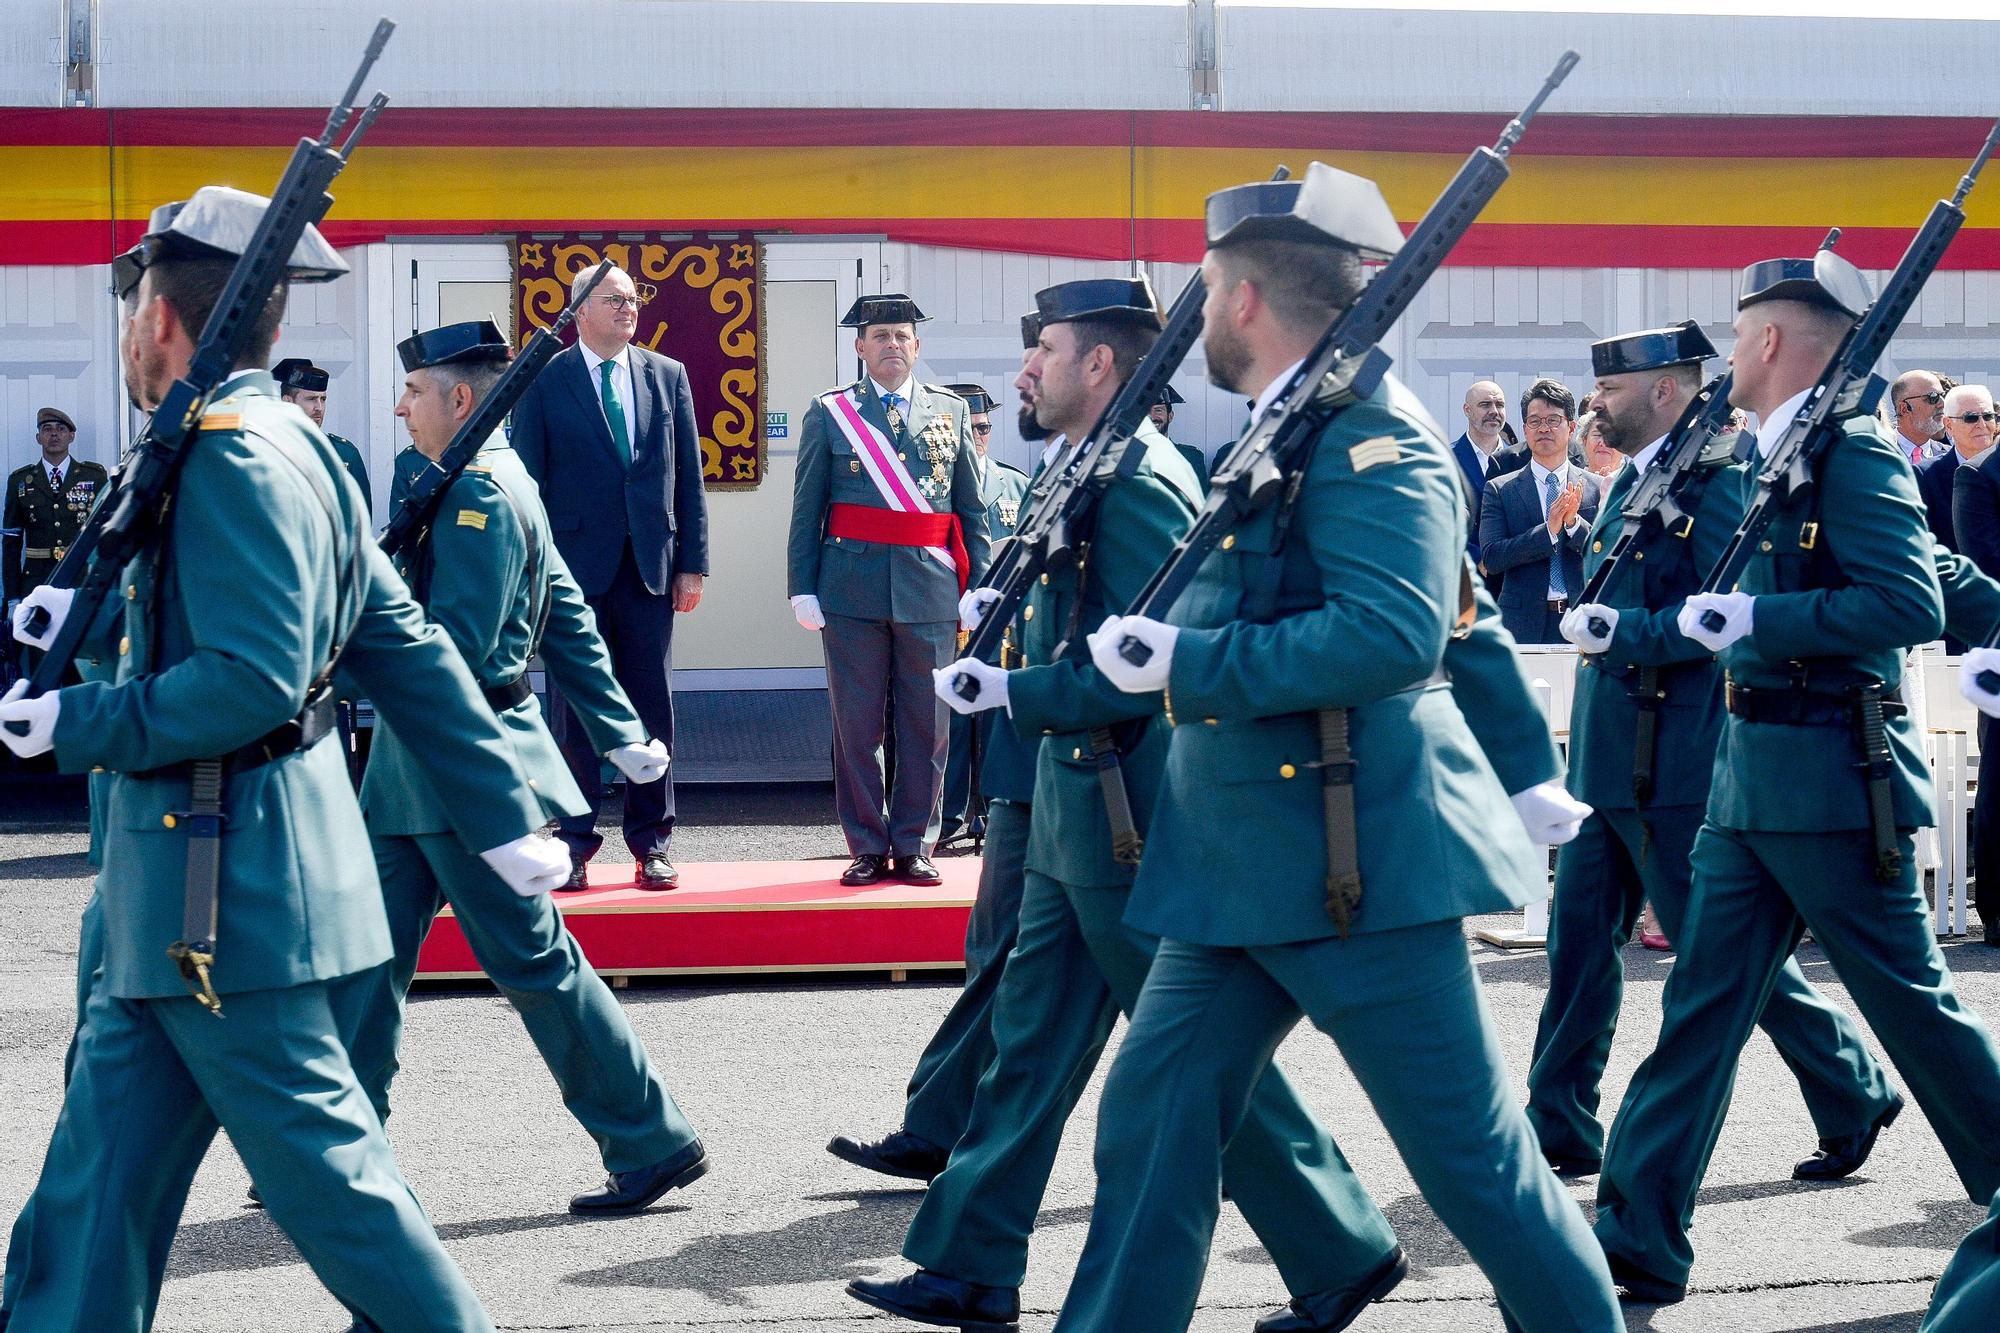 La Guardia Civil conmemora su 180 aniversario